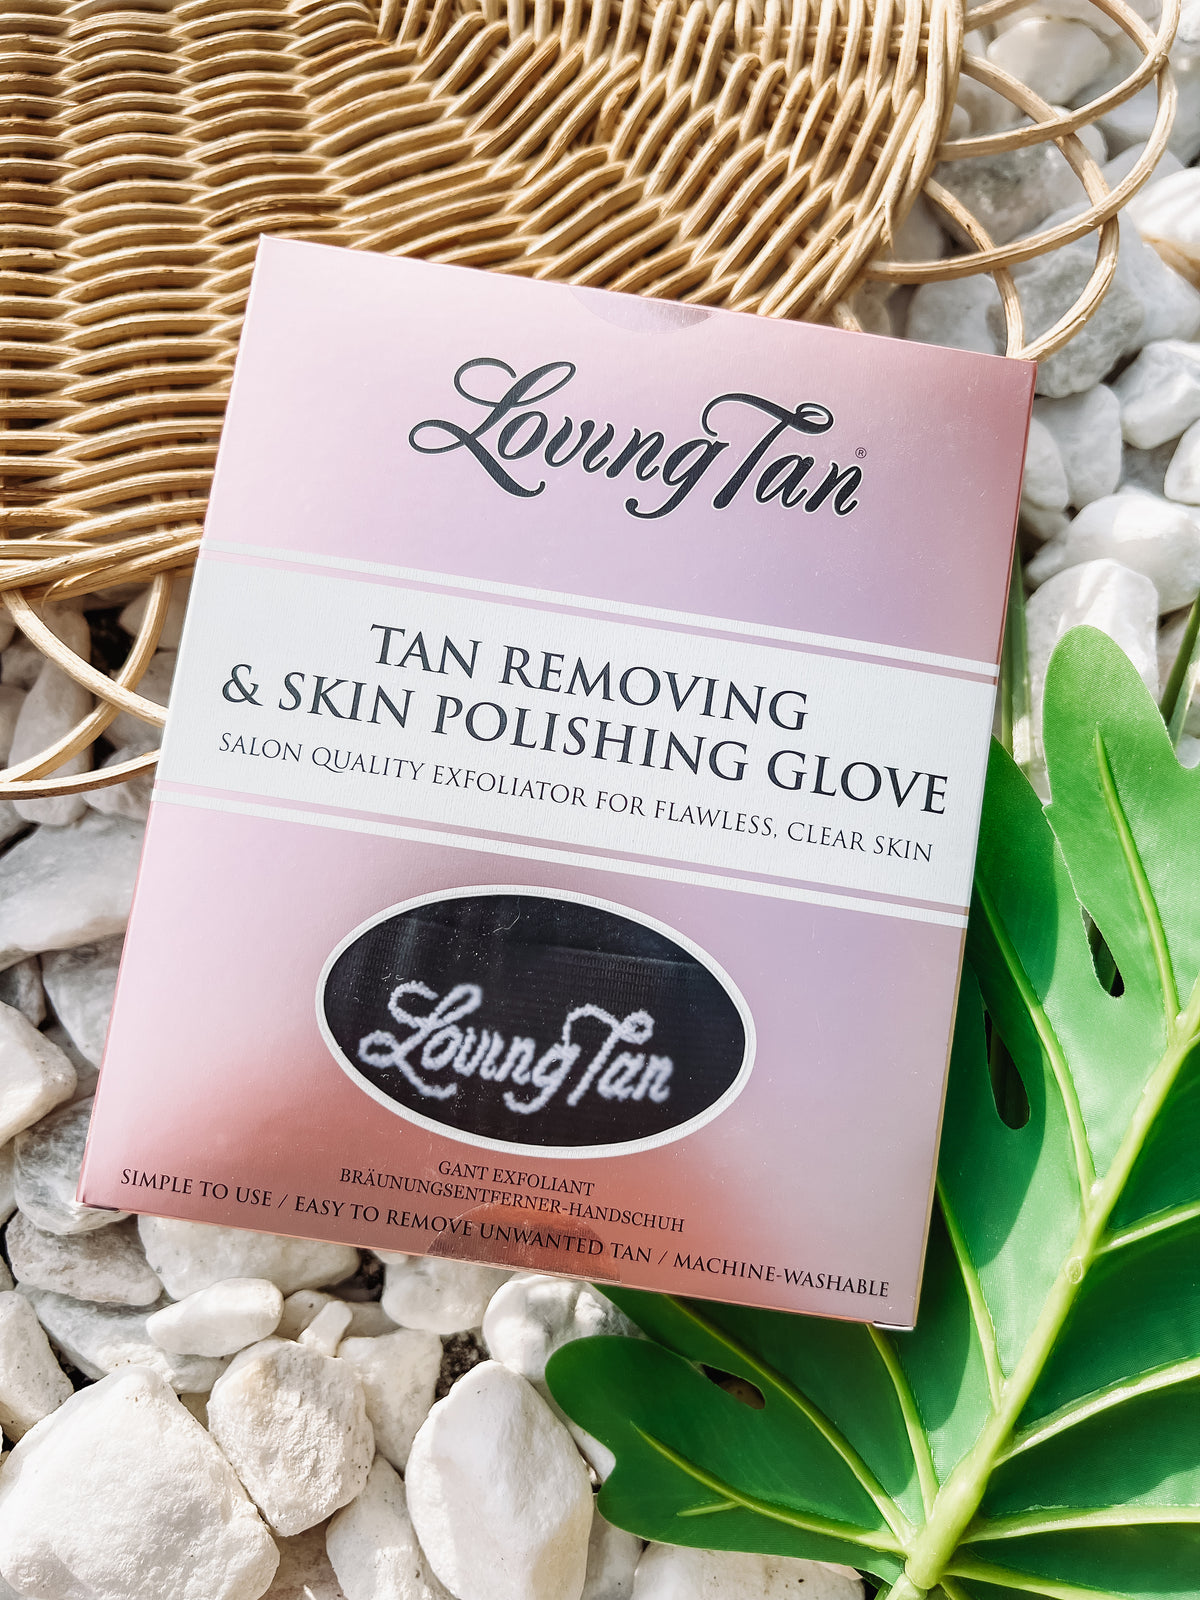 Tan Removing & Polishing Glove